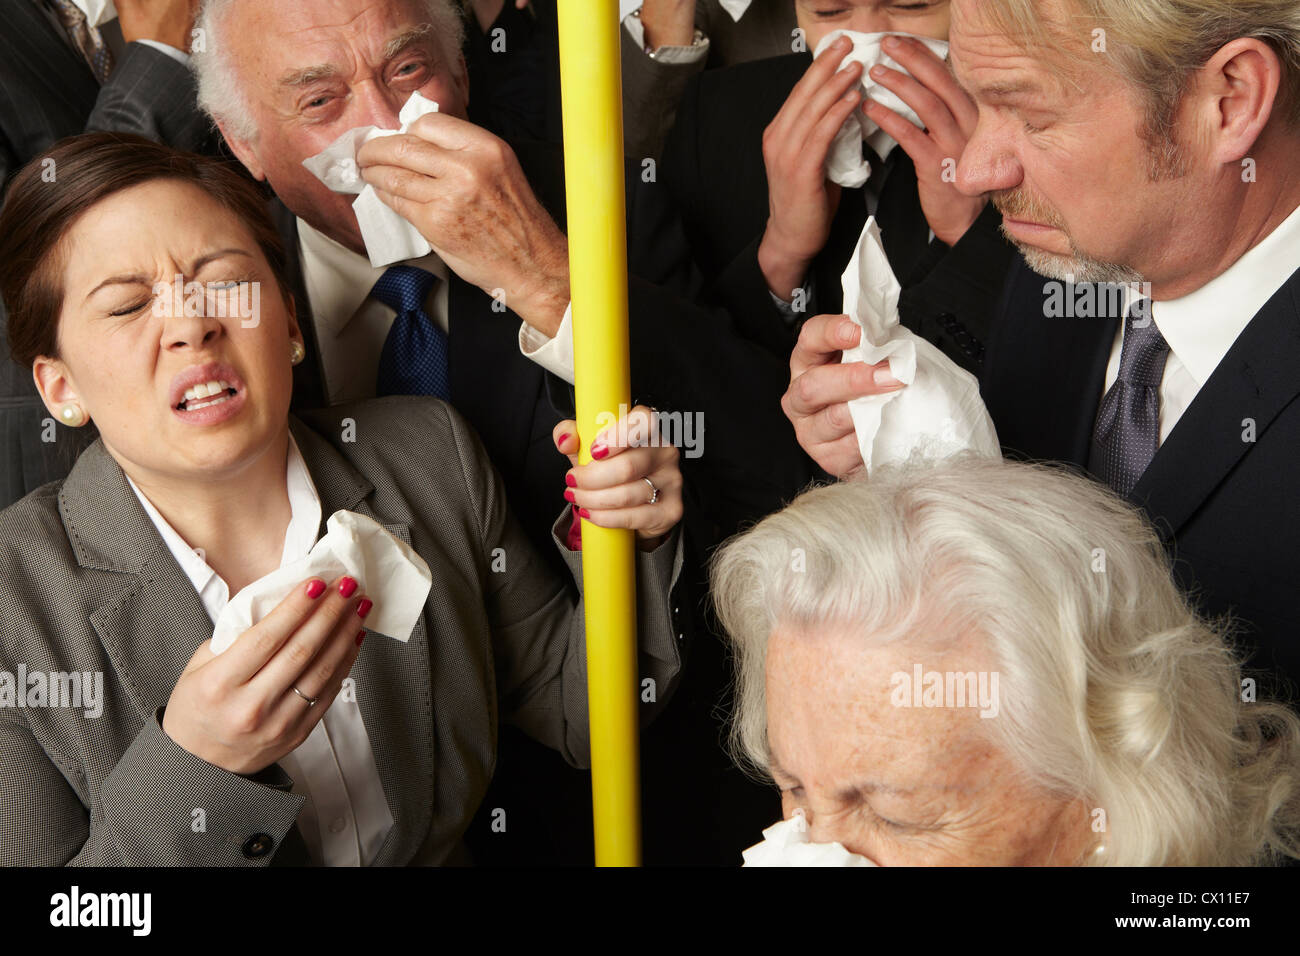 Businesspeople sneezing on subway train Stock Photo